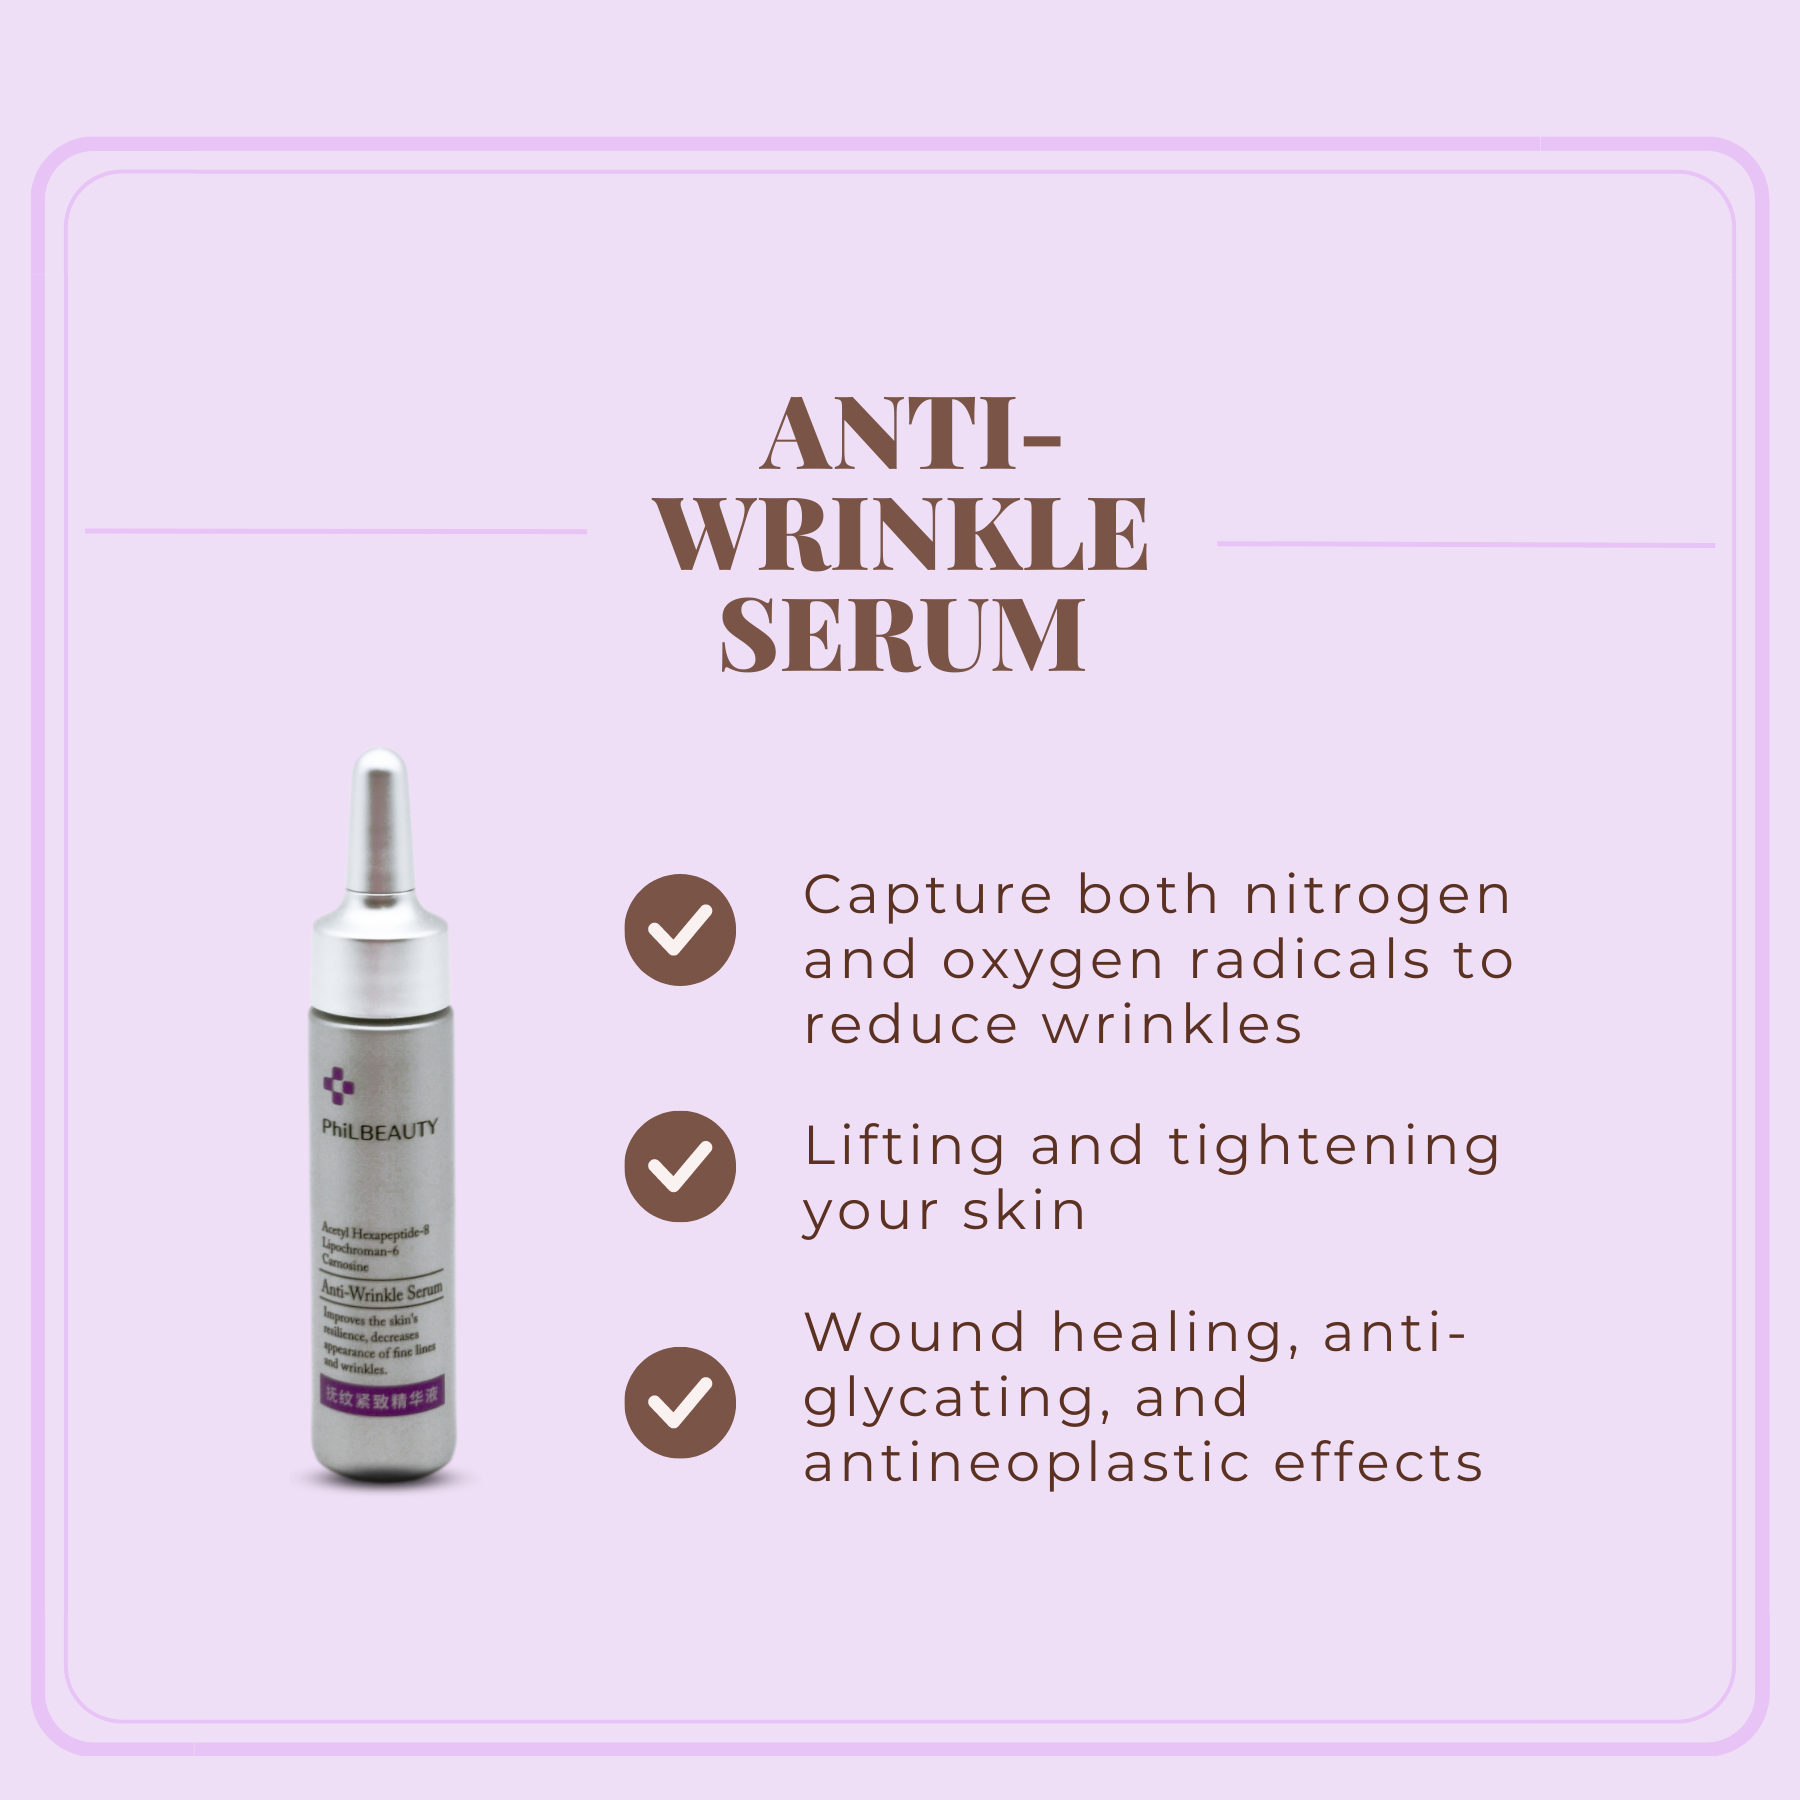 PhiLBEAUTY Anti-Wrinkle Serum 15ml